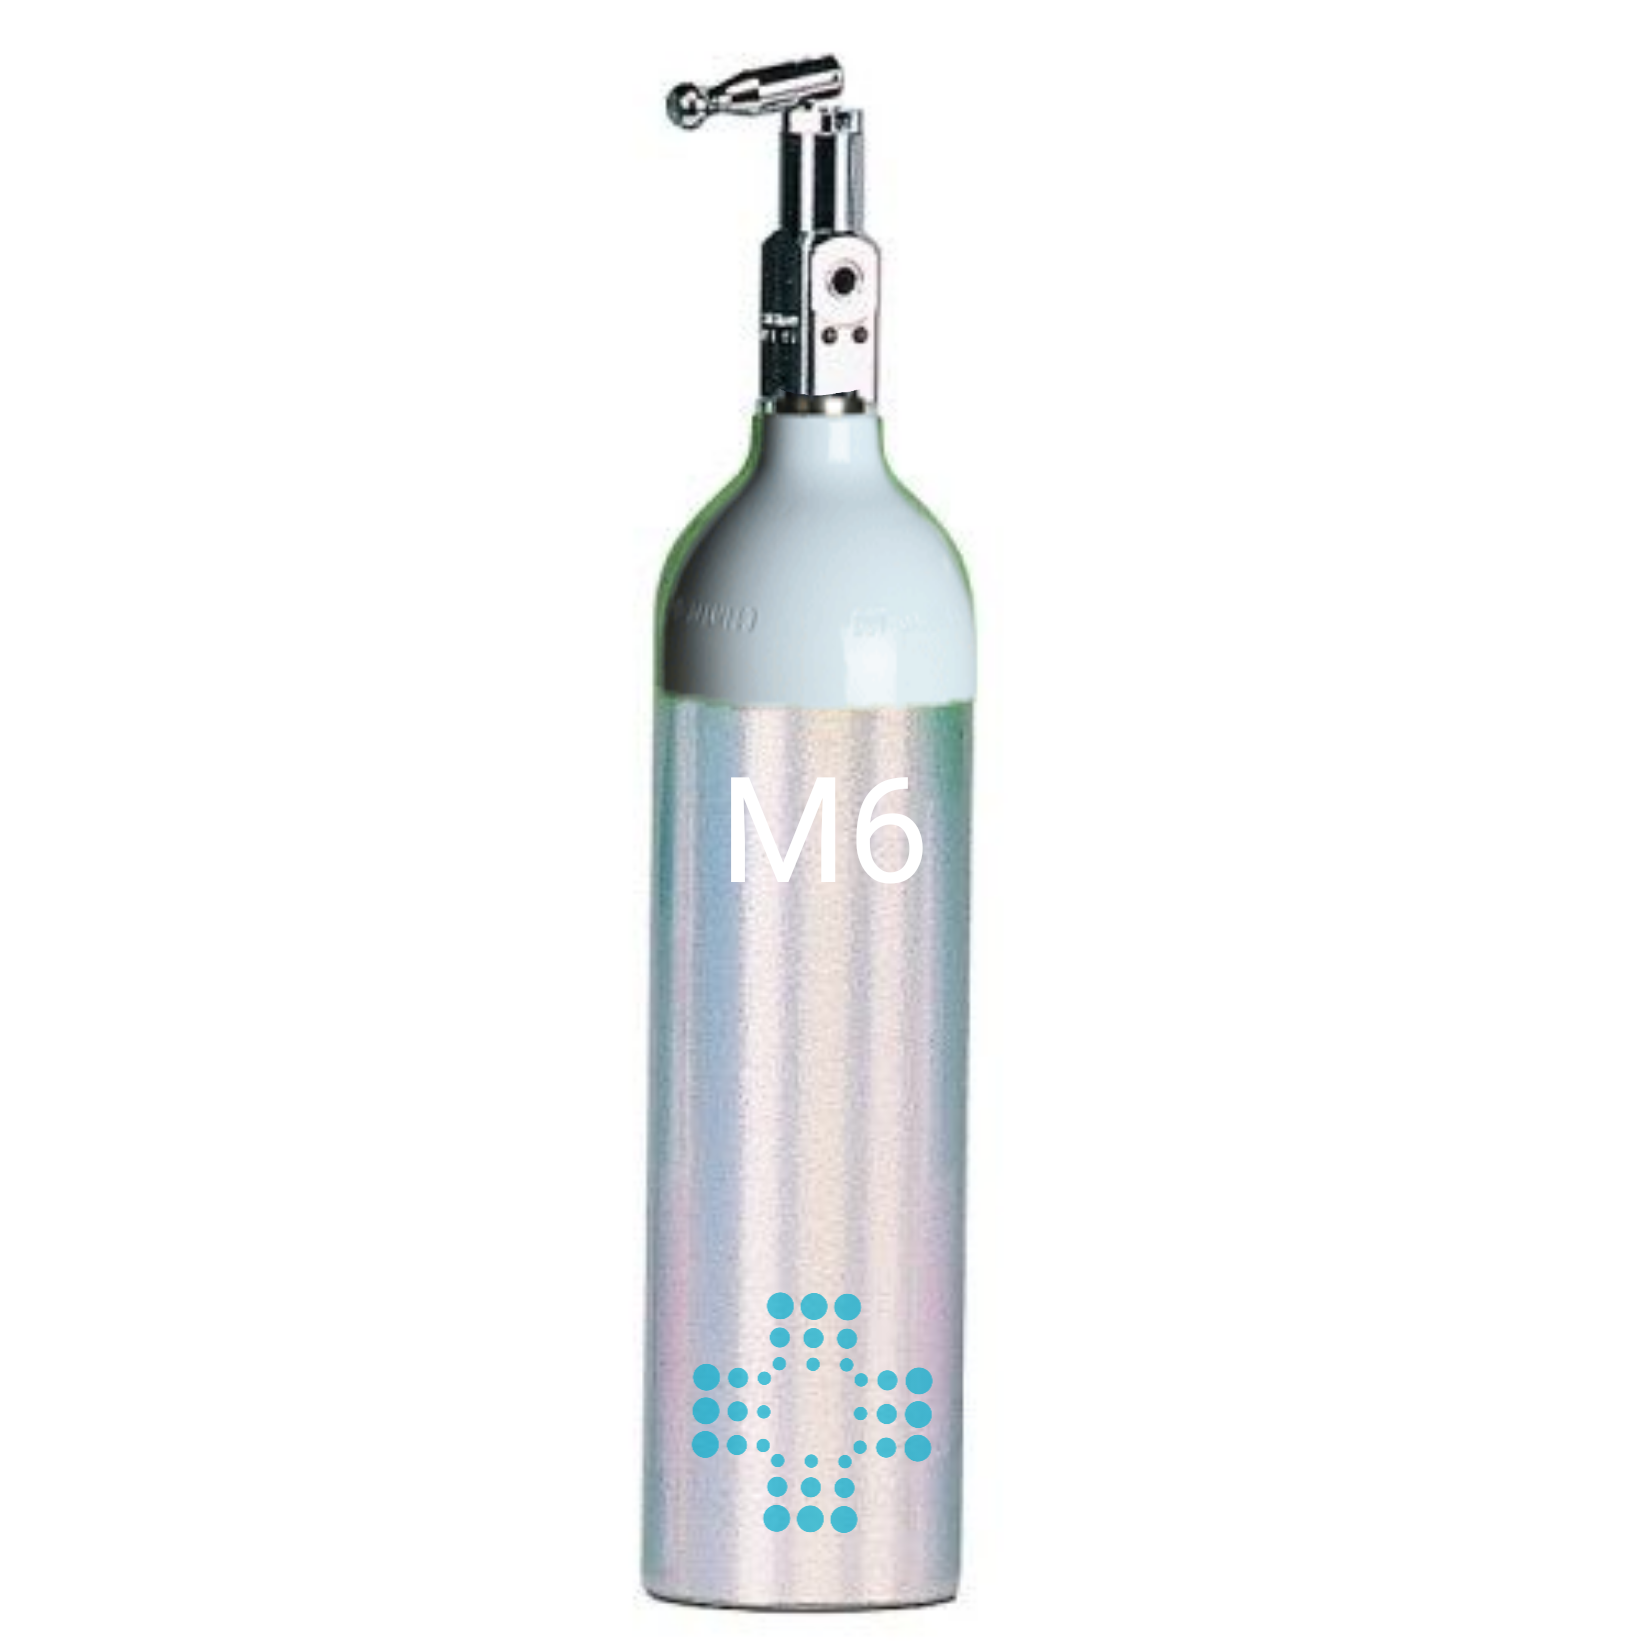 M6 oxygen tank cylinder